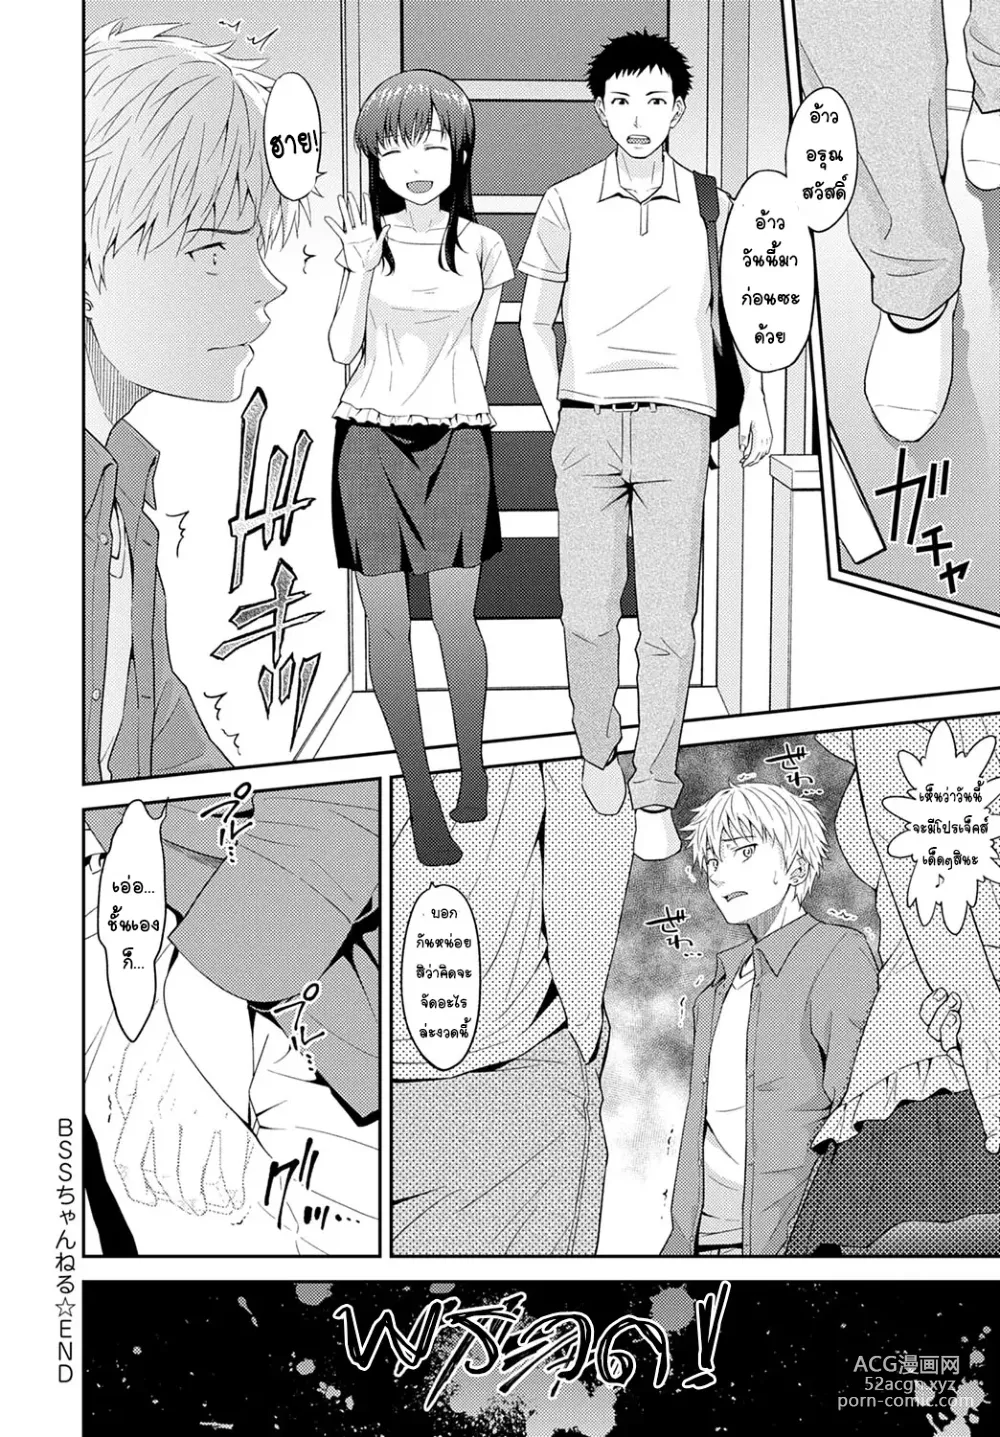 Page 24 of manga BSS Channel